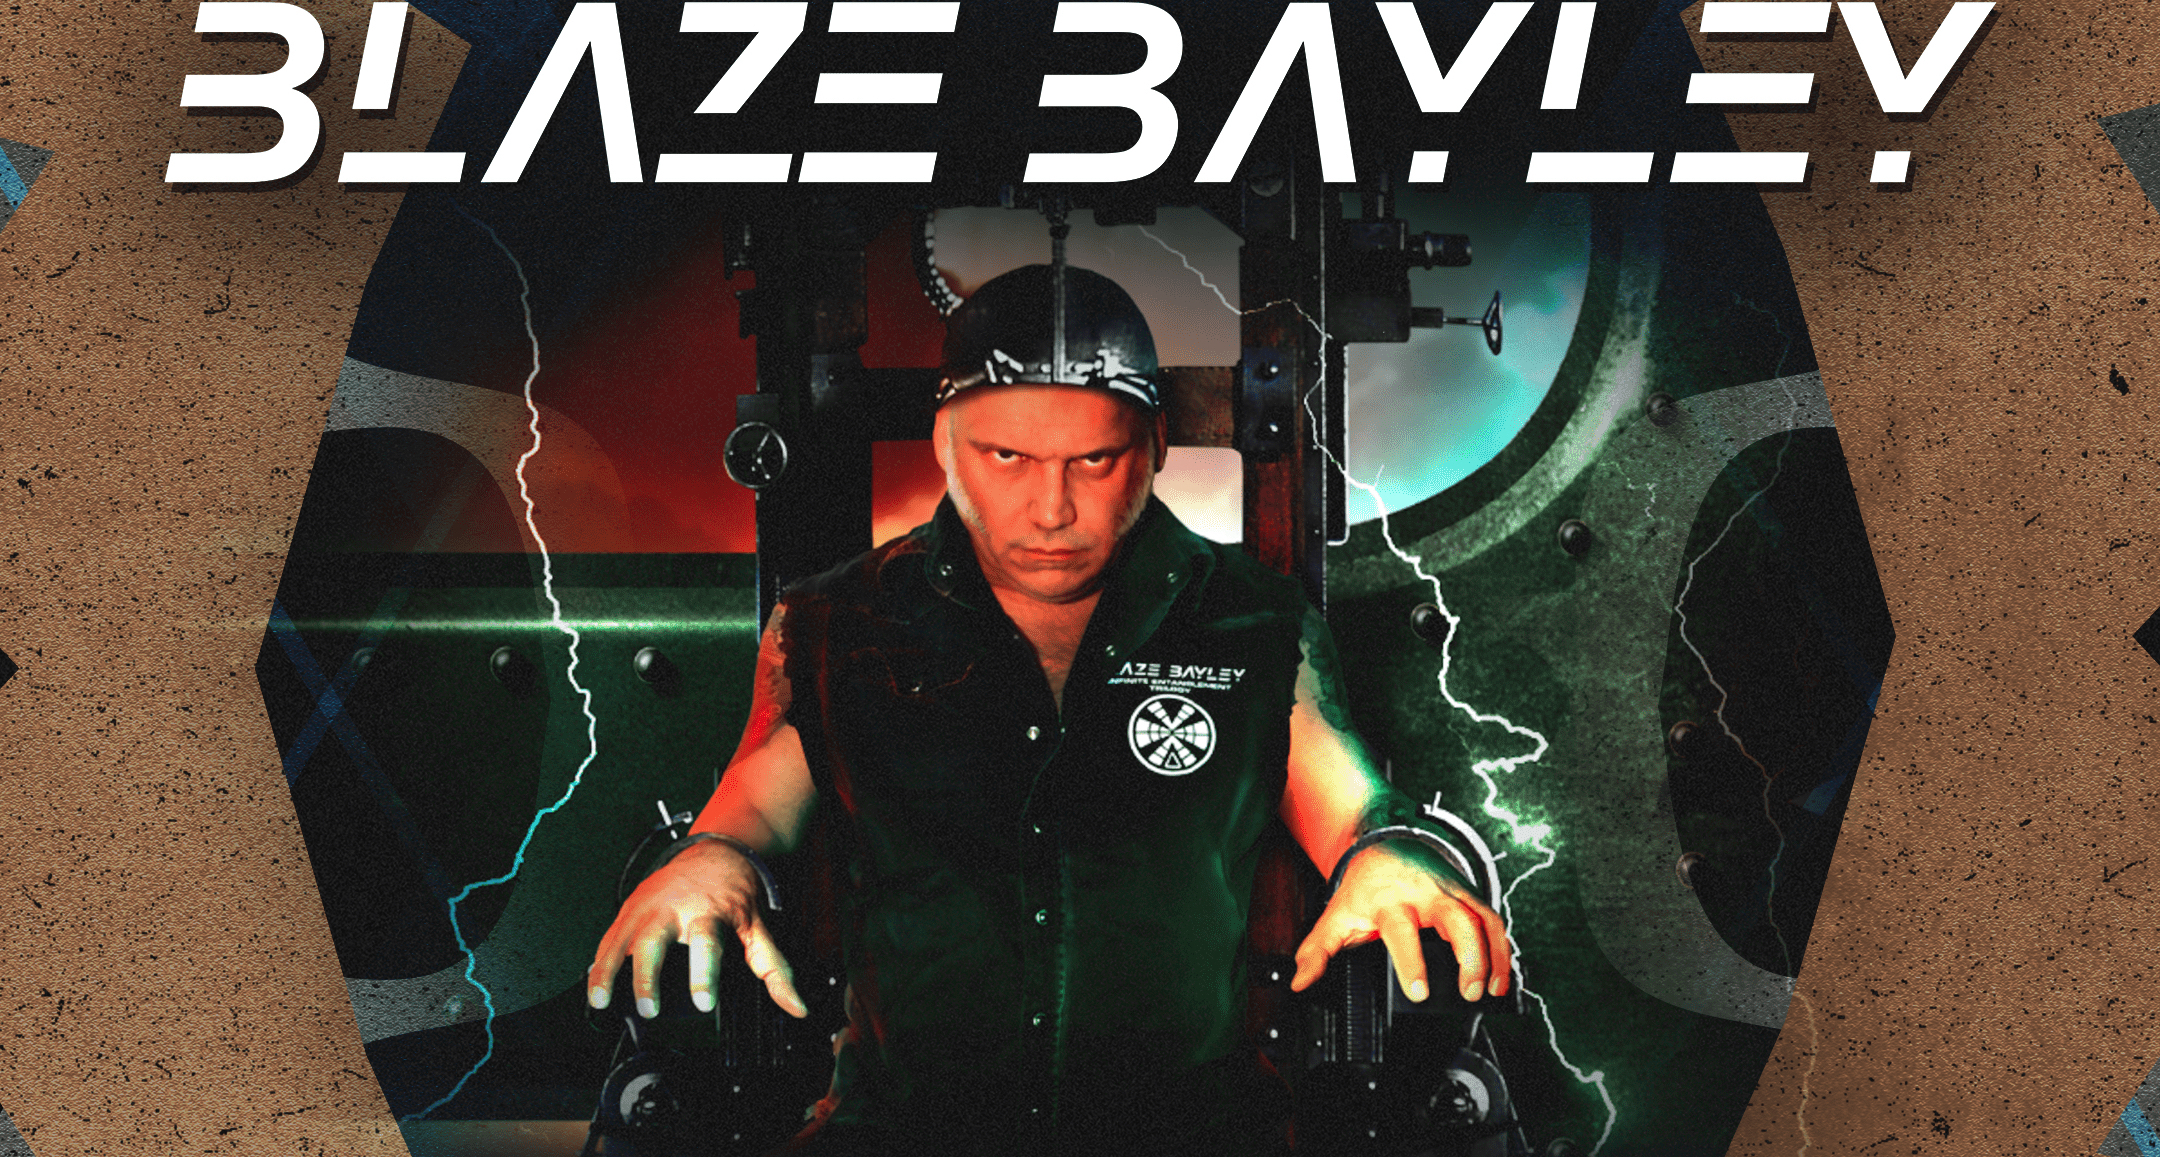 BLAZE BAYLEY – Iron Maiden XXX Anniversary sabato 3 agosto al Metal For Emergency